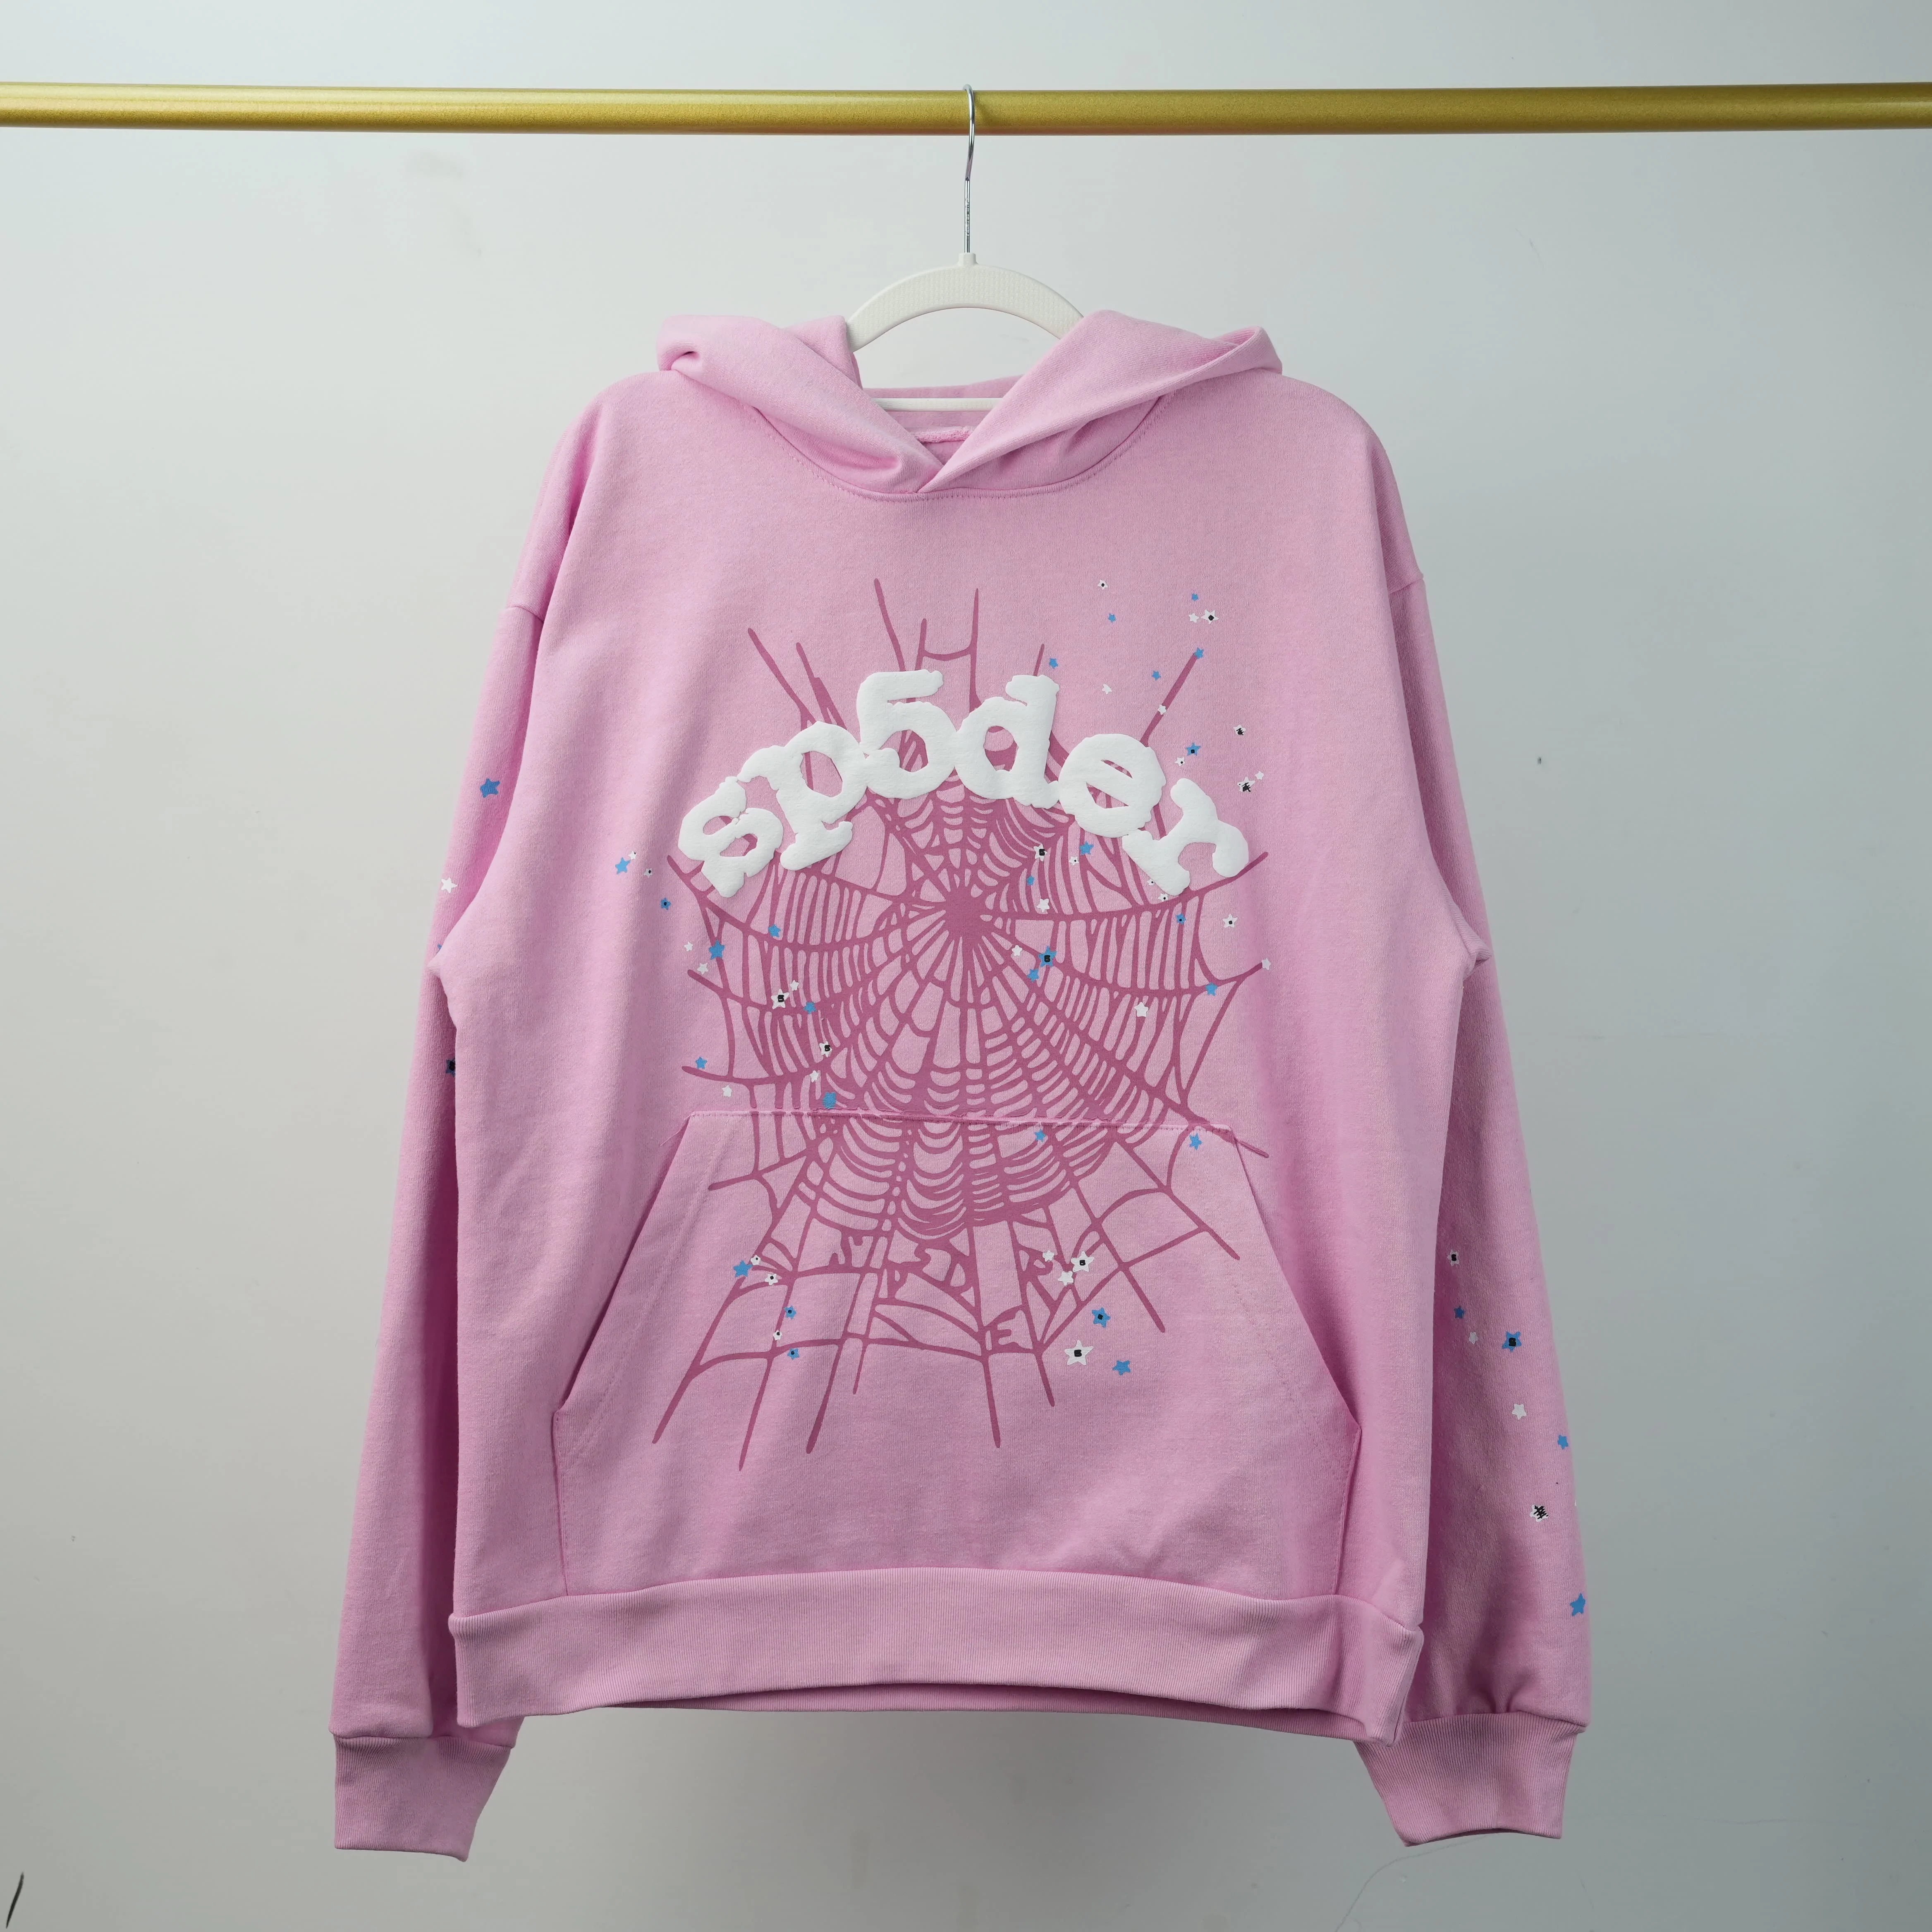 Sp 5der55555 Web Men's Hoodies Tracksuits High Quality Streetwear Pink ...